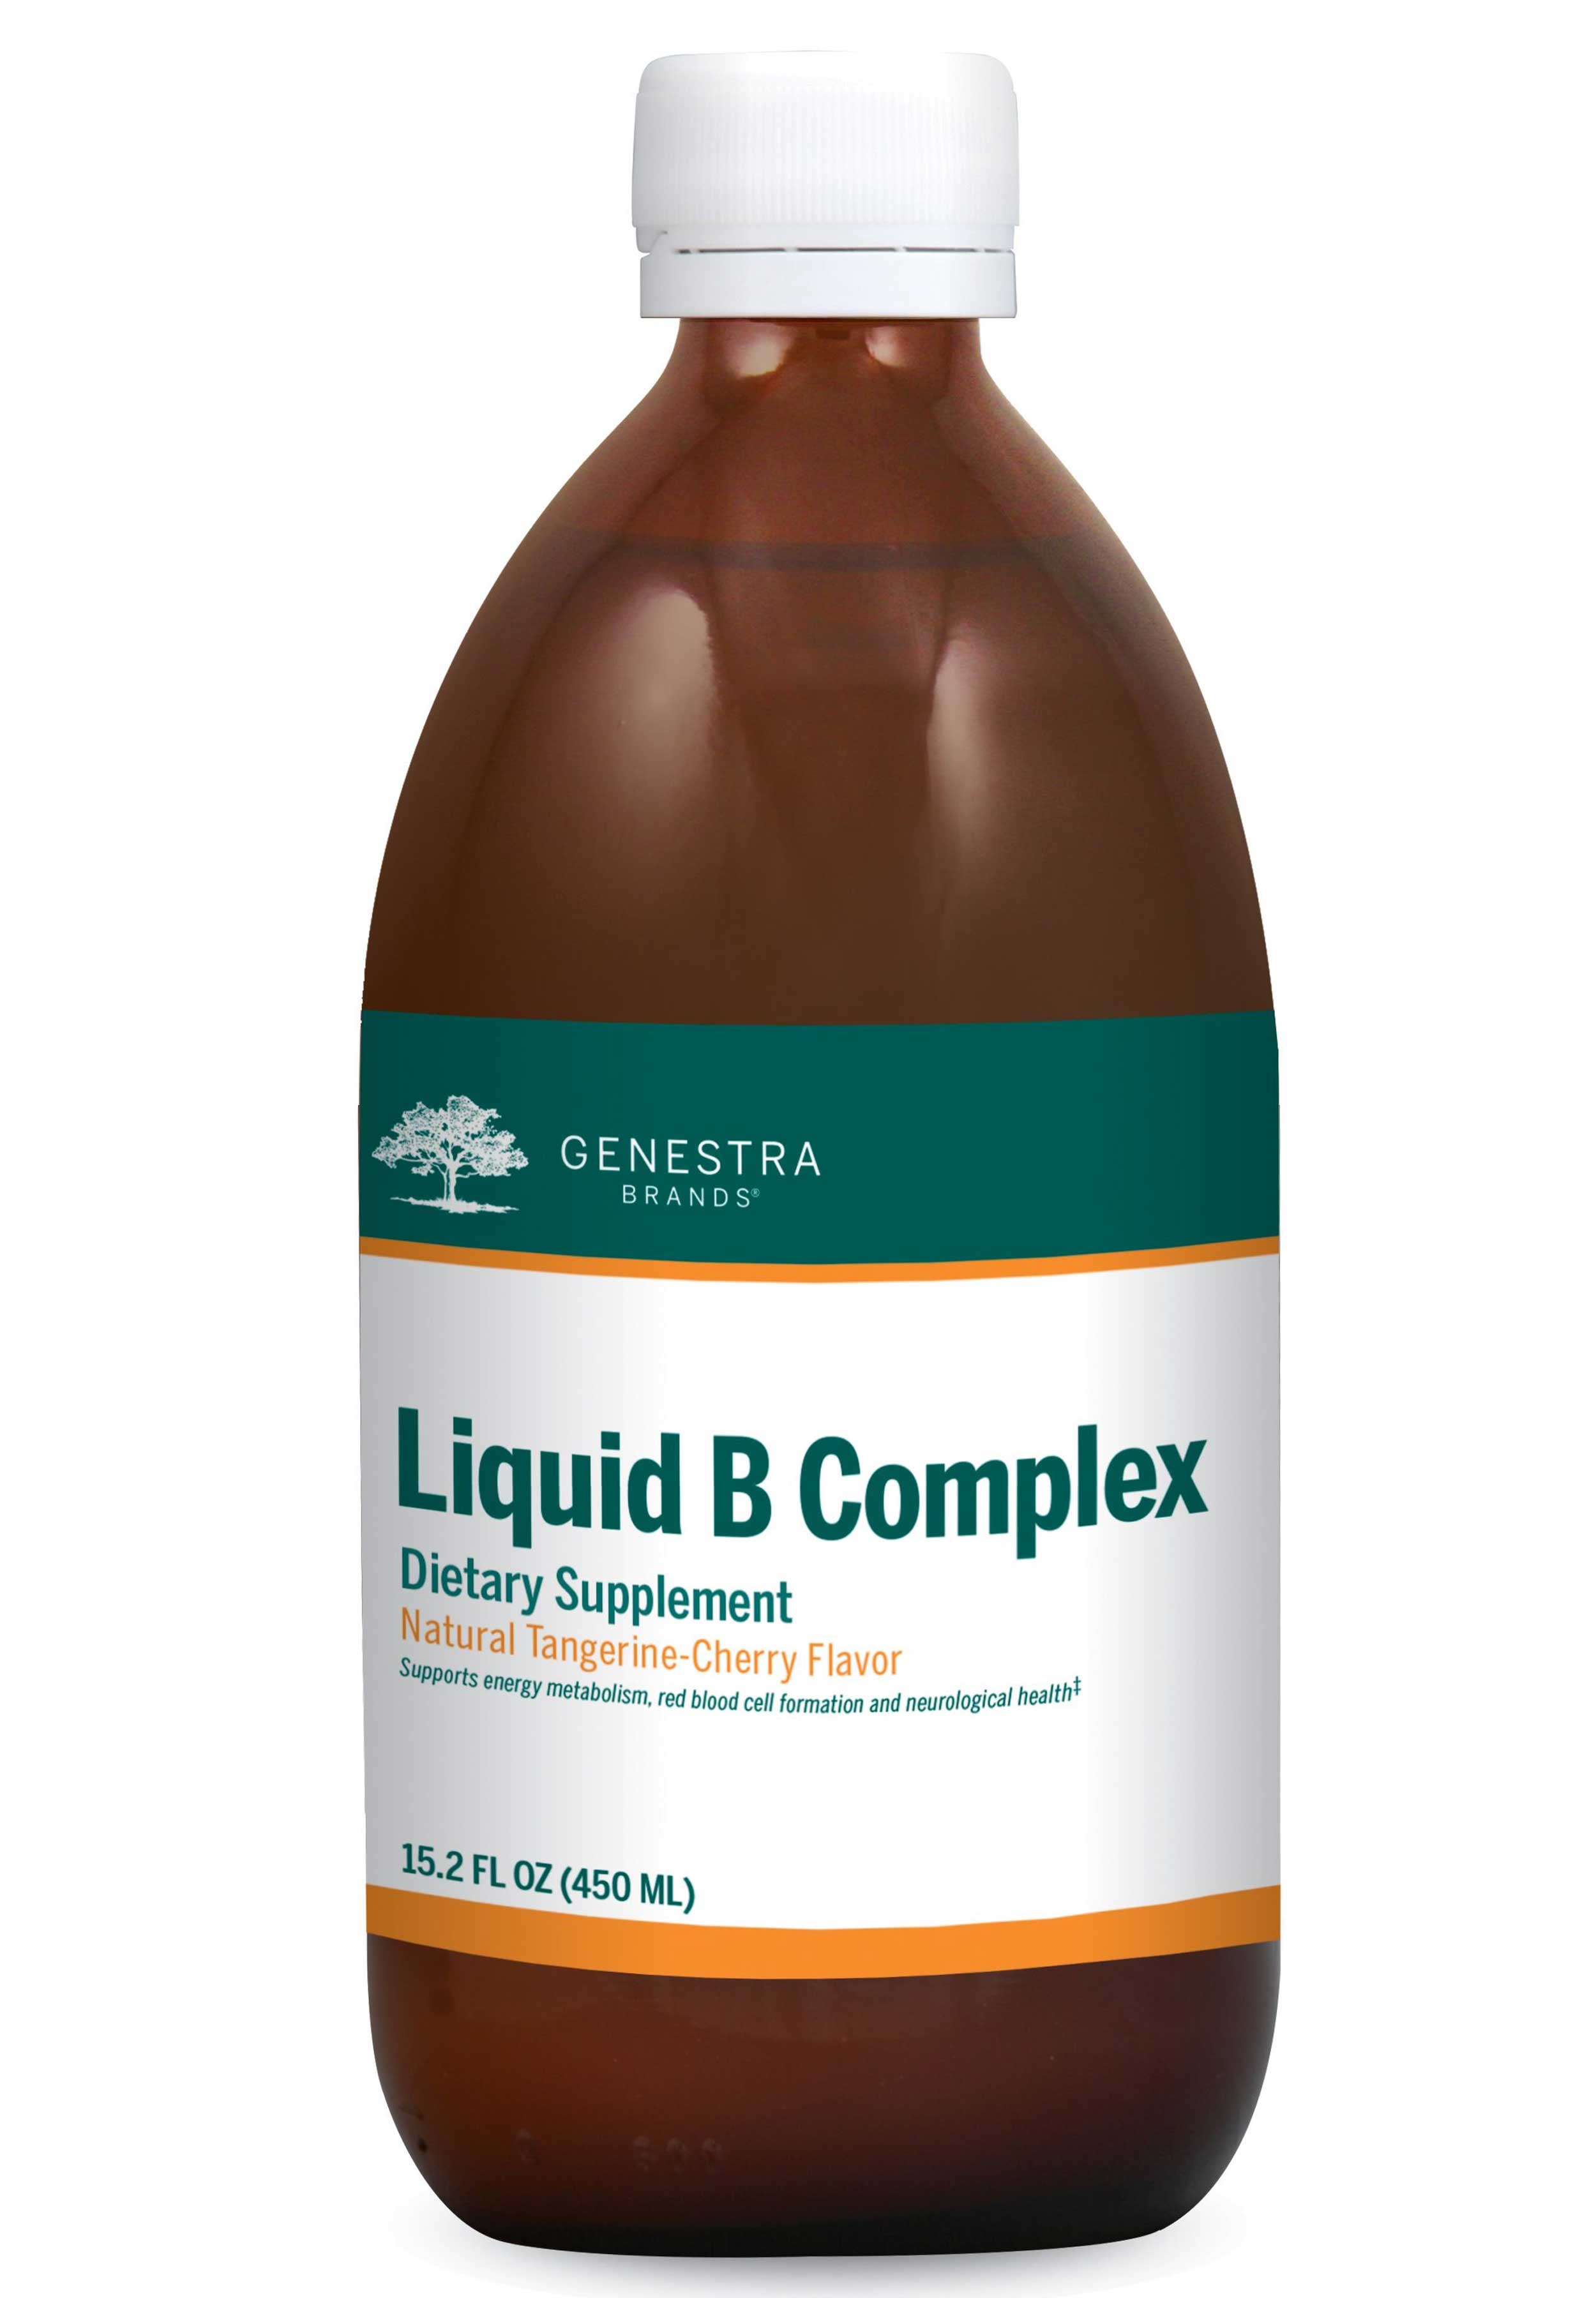 Genestra Brands Liquid B Complex